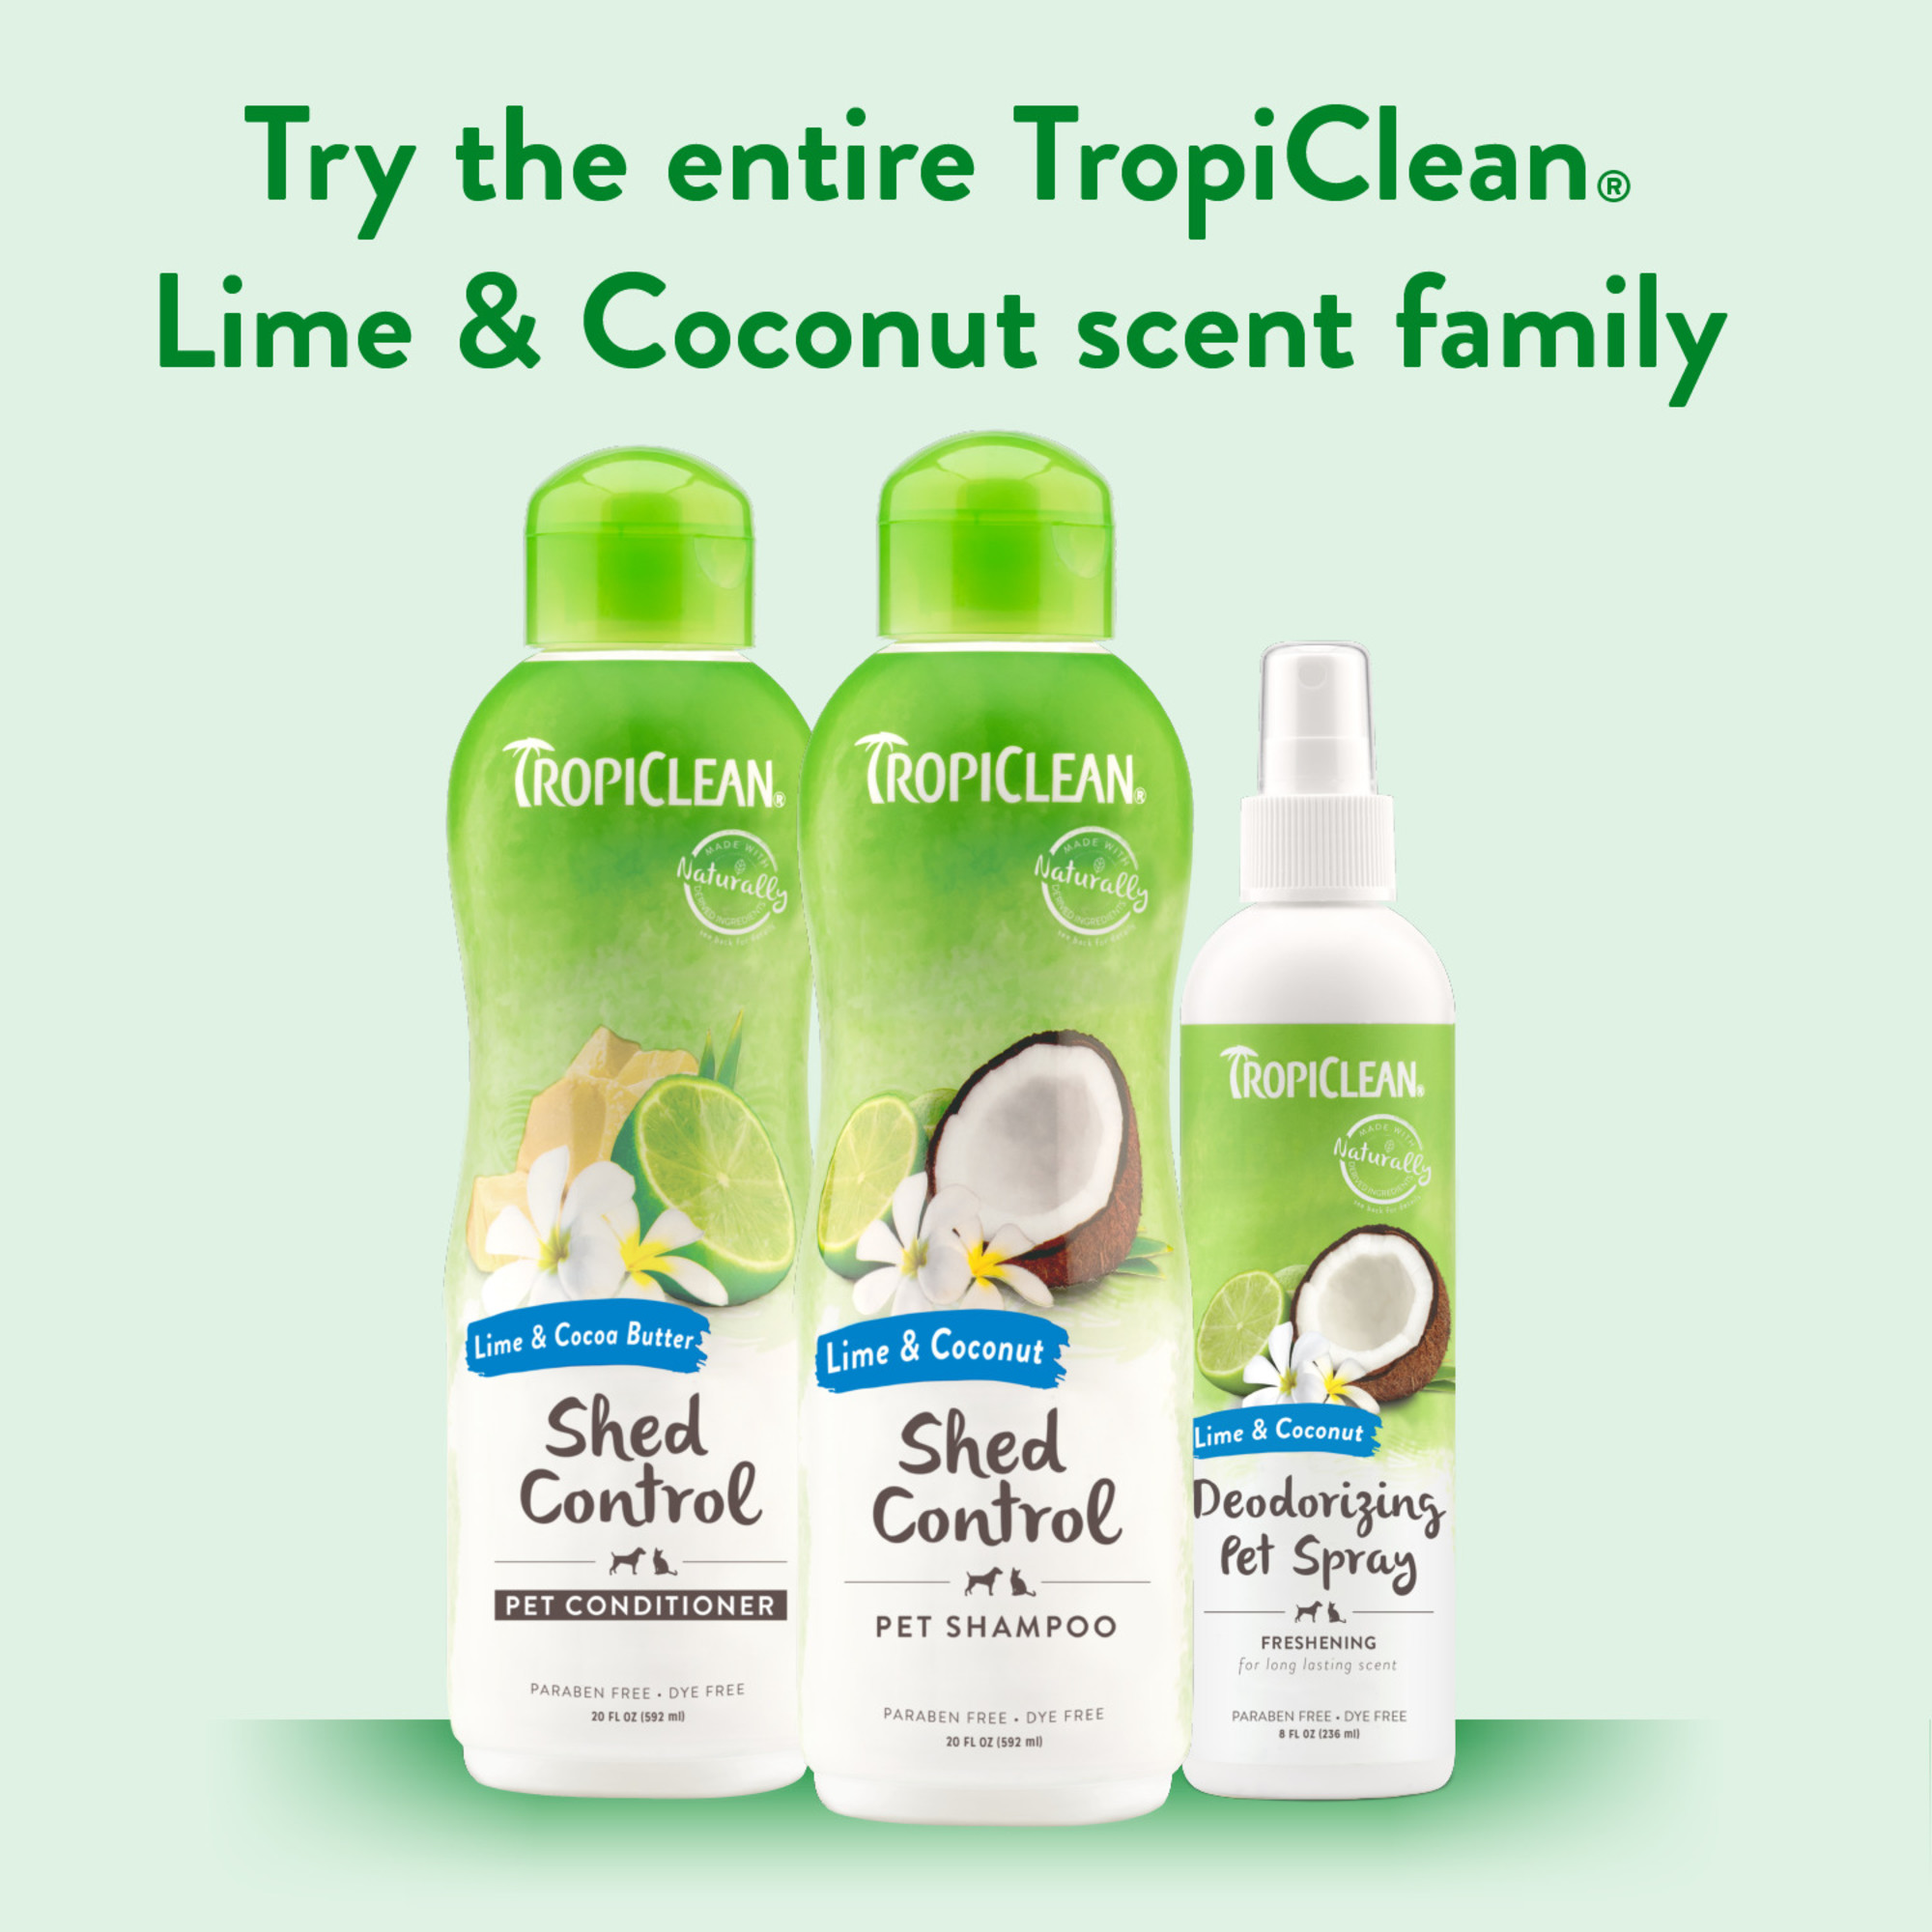 Lime & Coconut Deodorizing Pet Spray